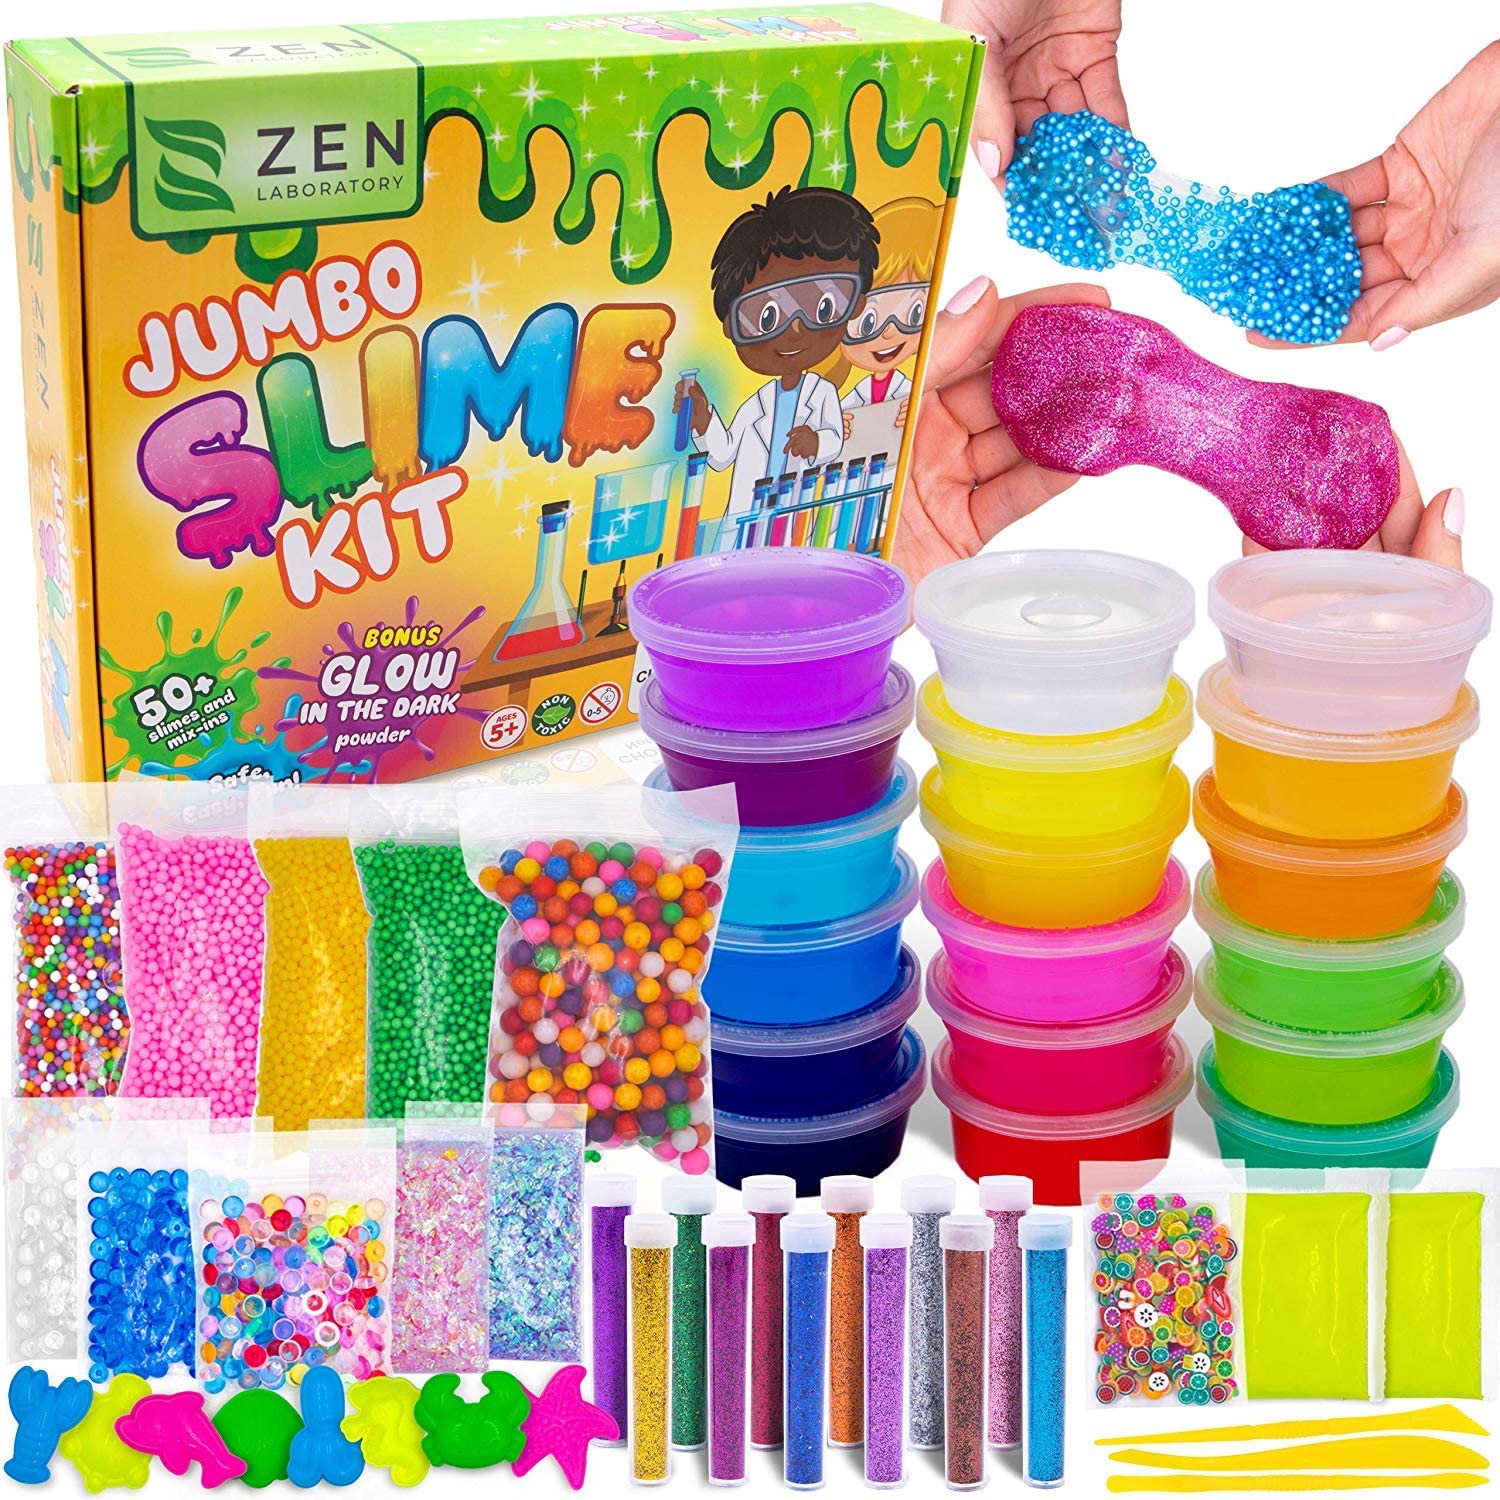 Zen Laboratory Jumbo Non-Toxic Slime Kit